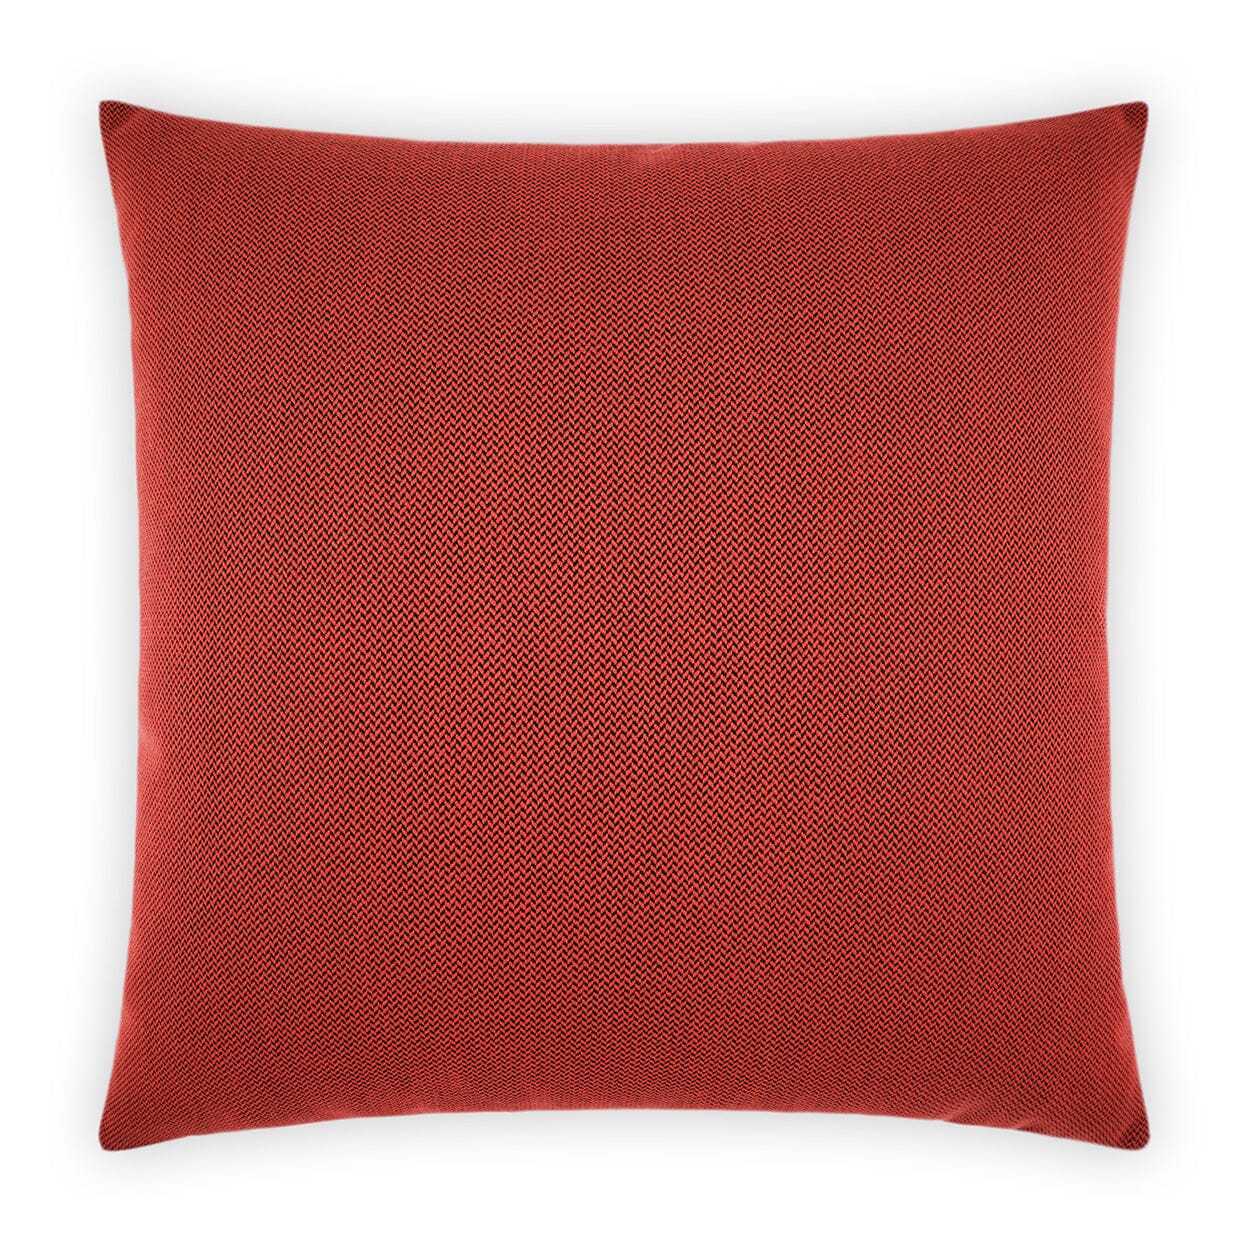 D.V. Kap 22" x 22" Outdoor Throw Pillow | Pyke Red Pillows D.V Kap Outdoor